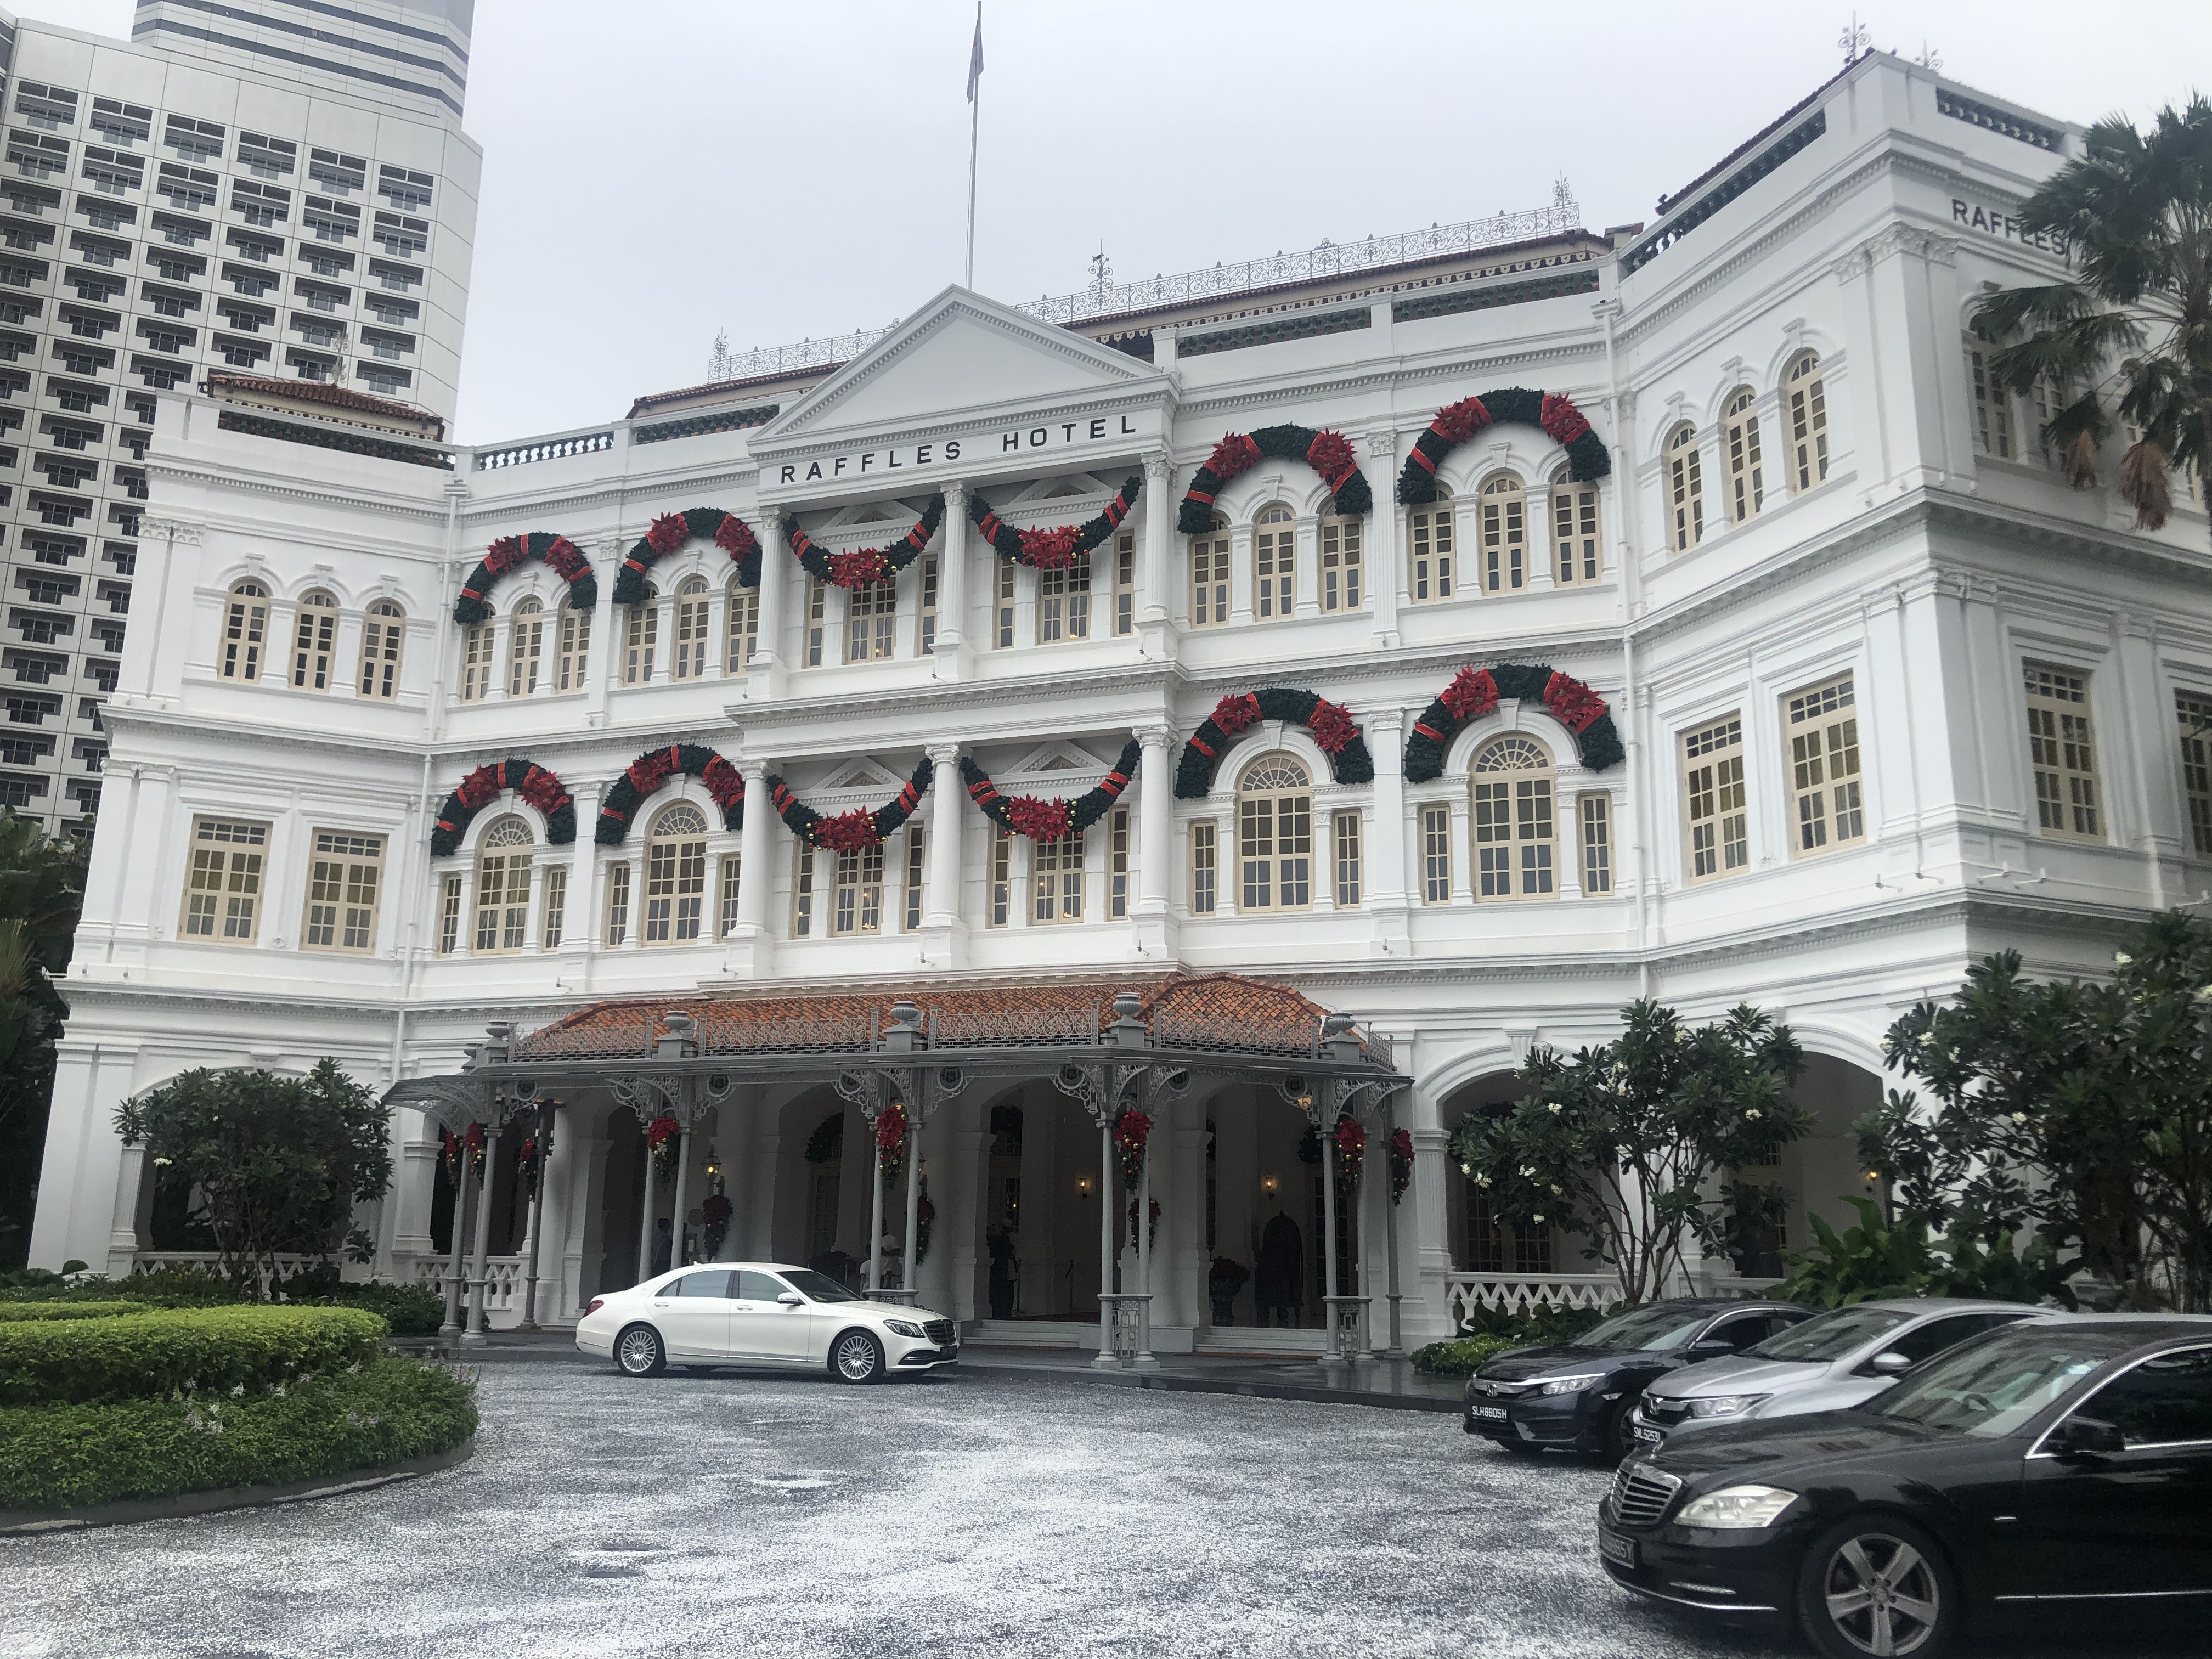 Raffles Hotel In Singapore